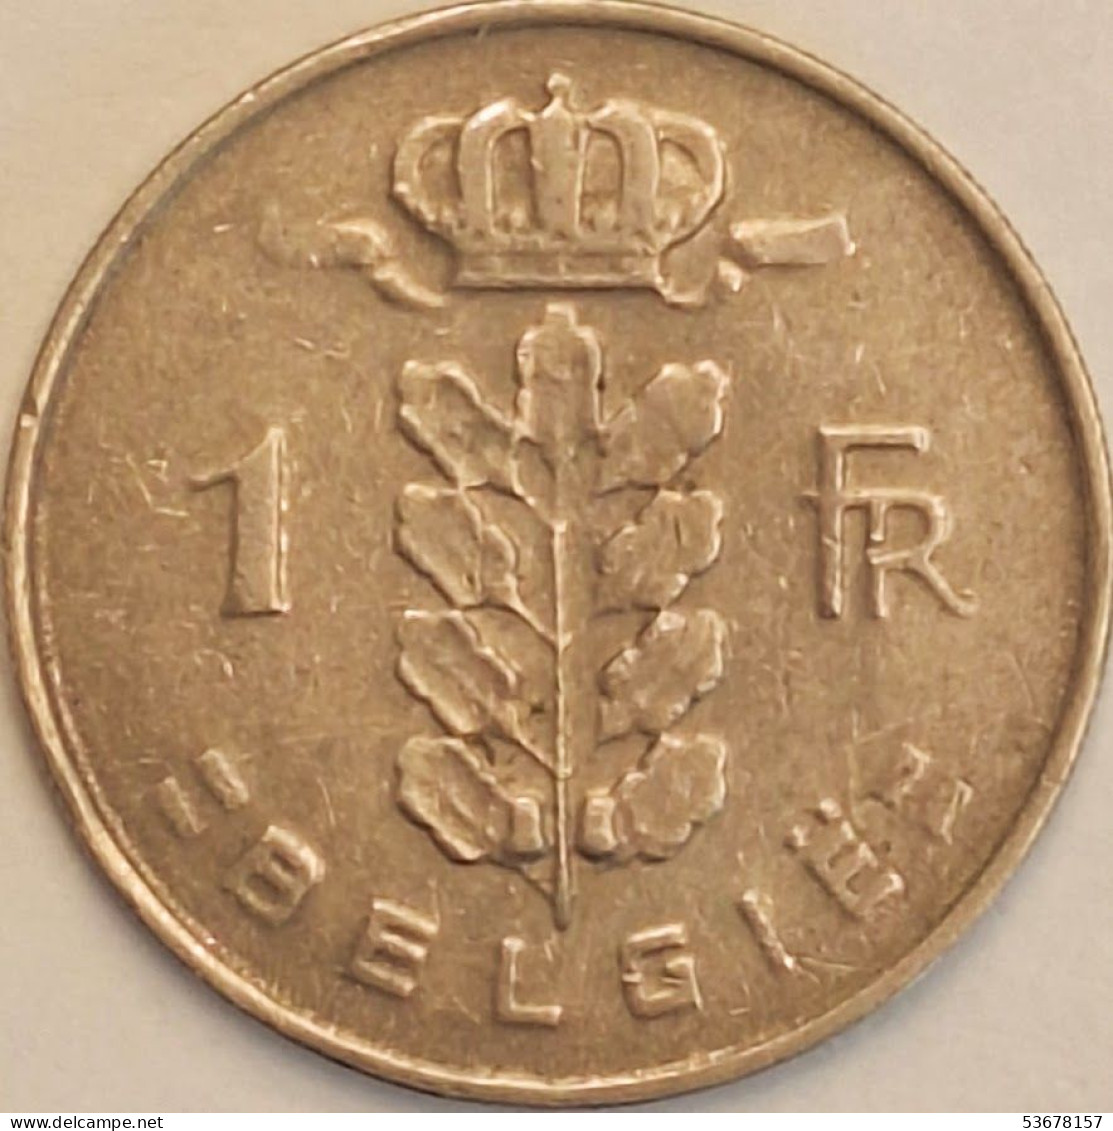 Belgium - Franc 1967, KM# 143.1 (#3133) - 1 Franc